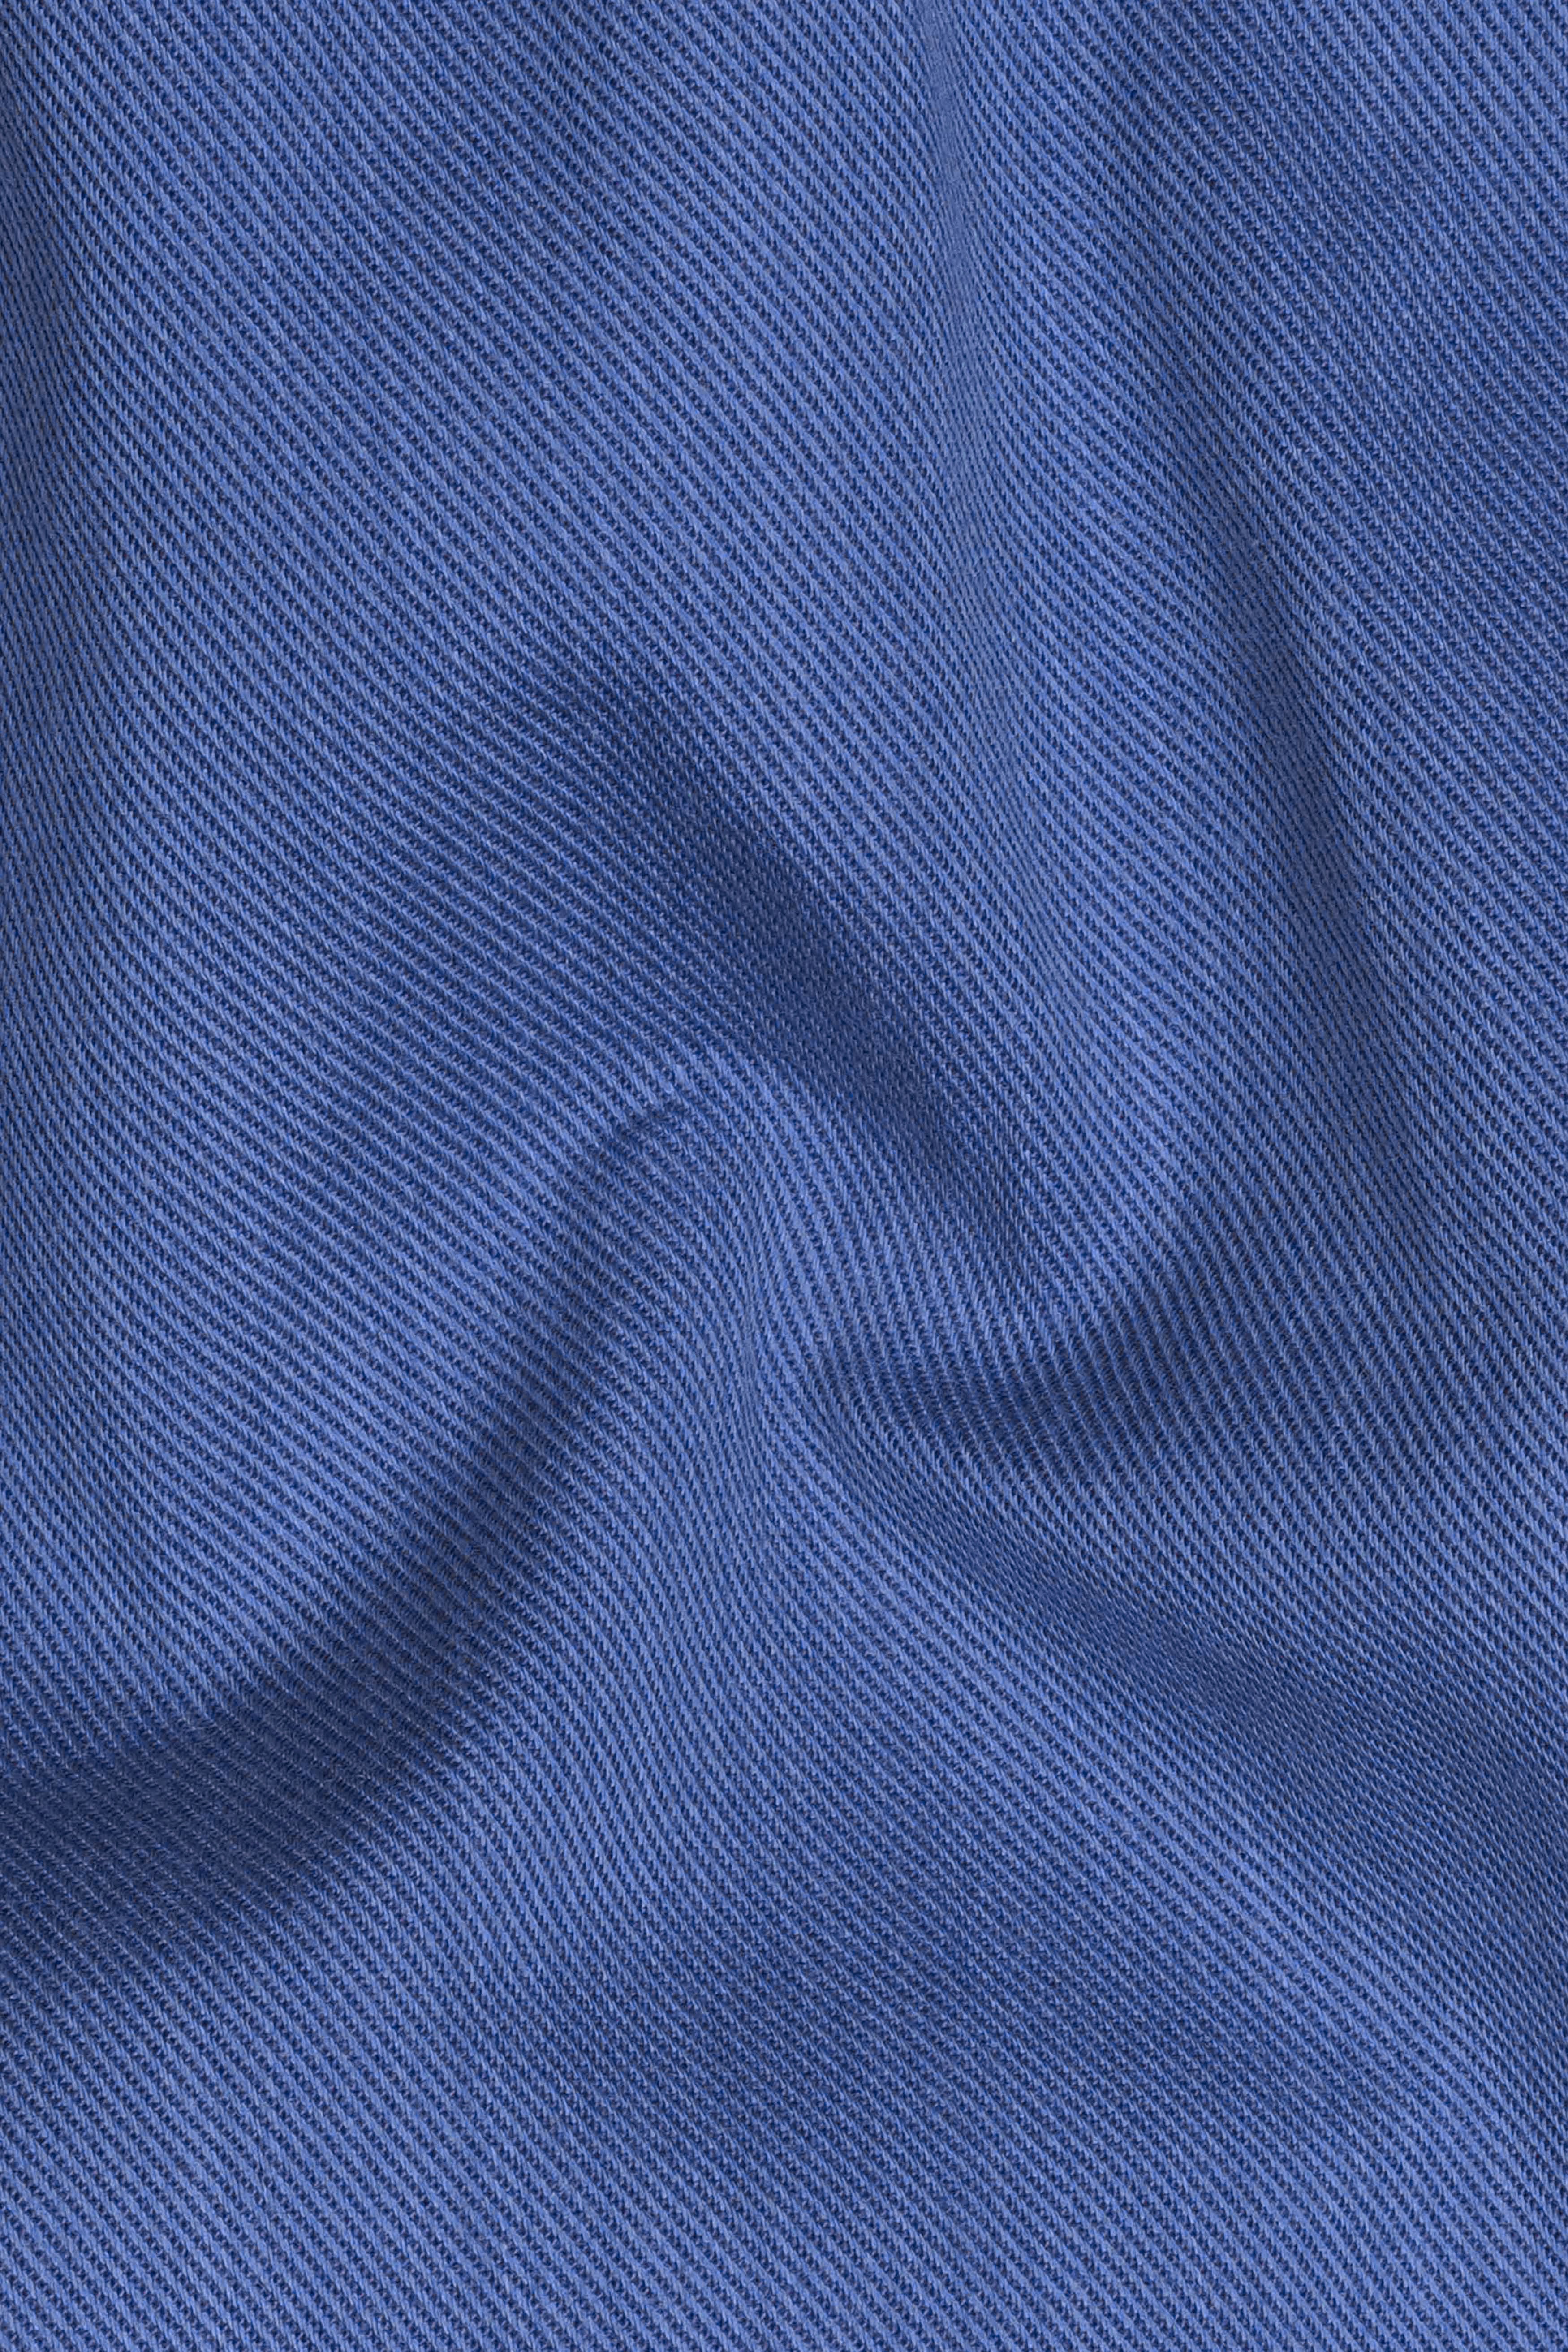 Twilight Blue Premium Cotton Cross Placket Bandhgala Nehru Jacket